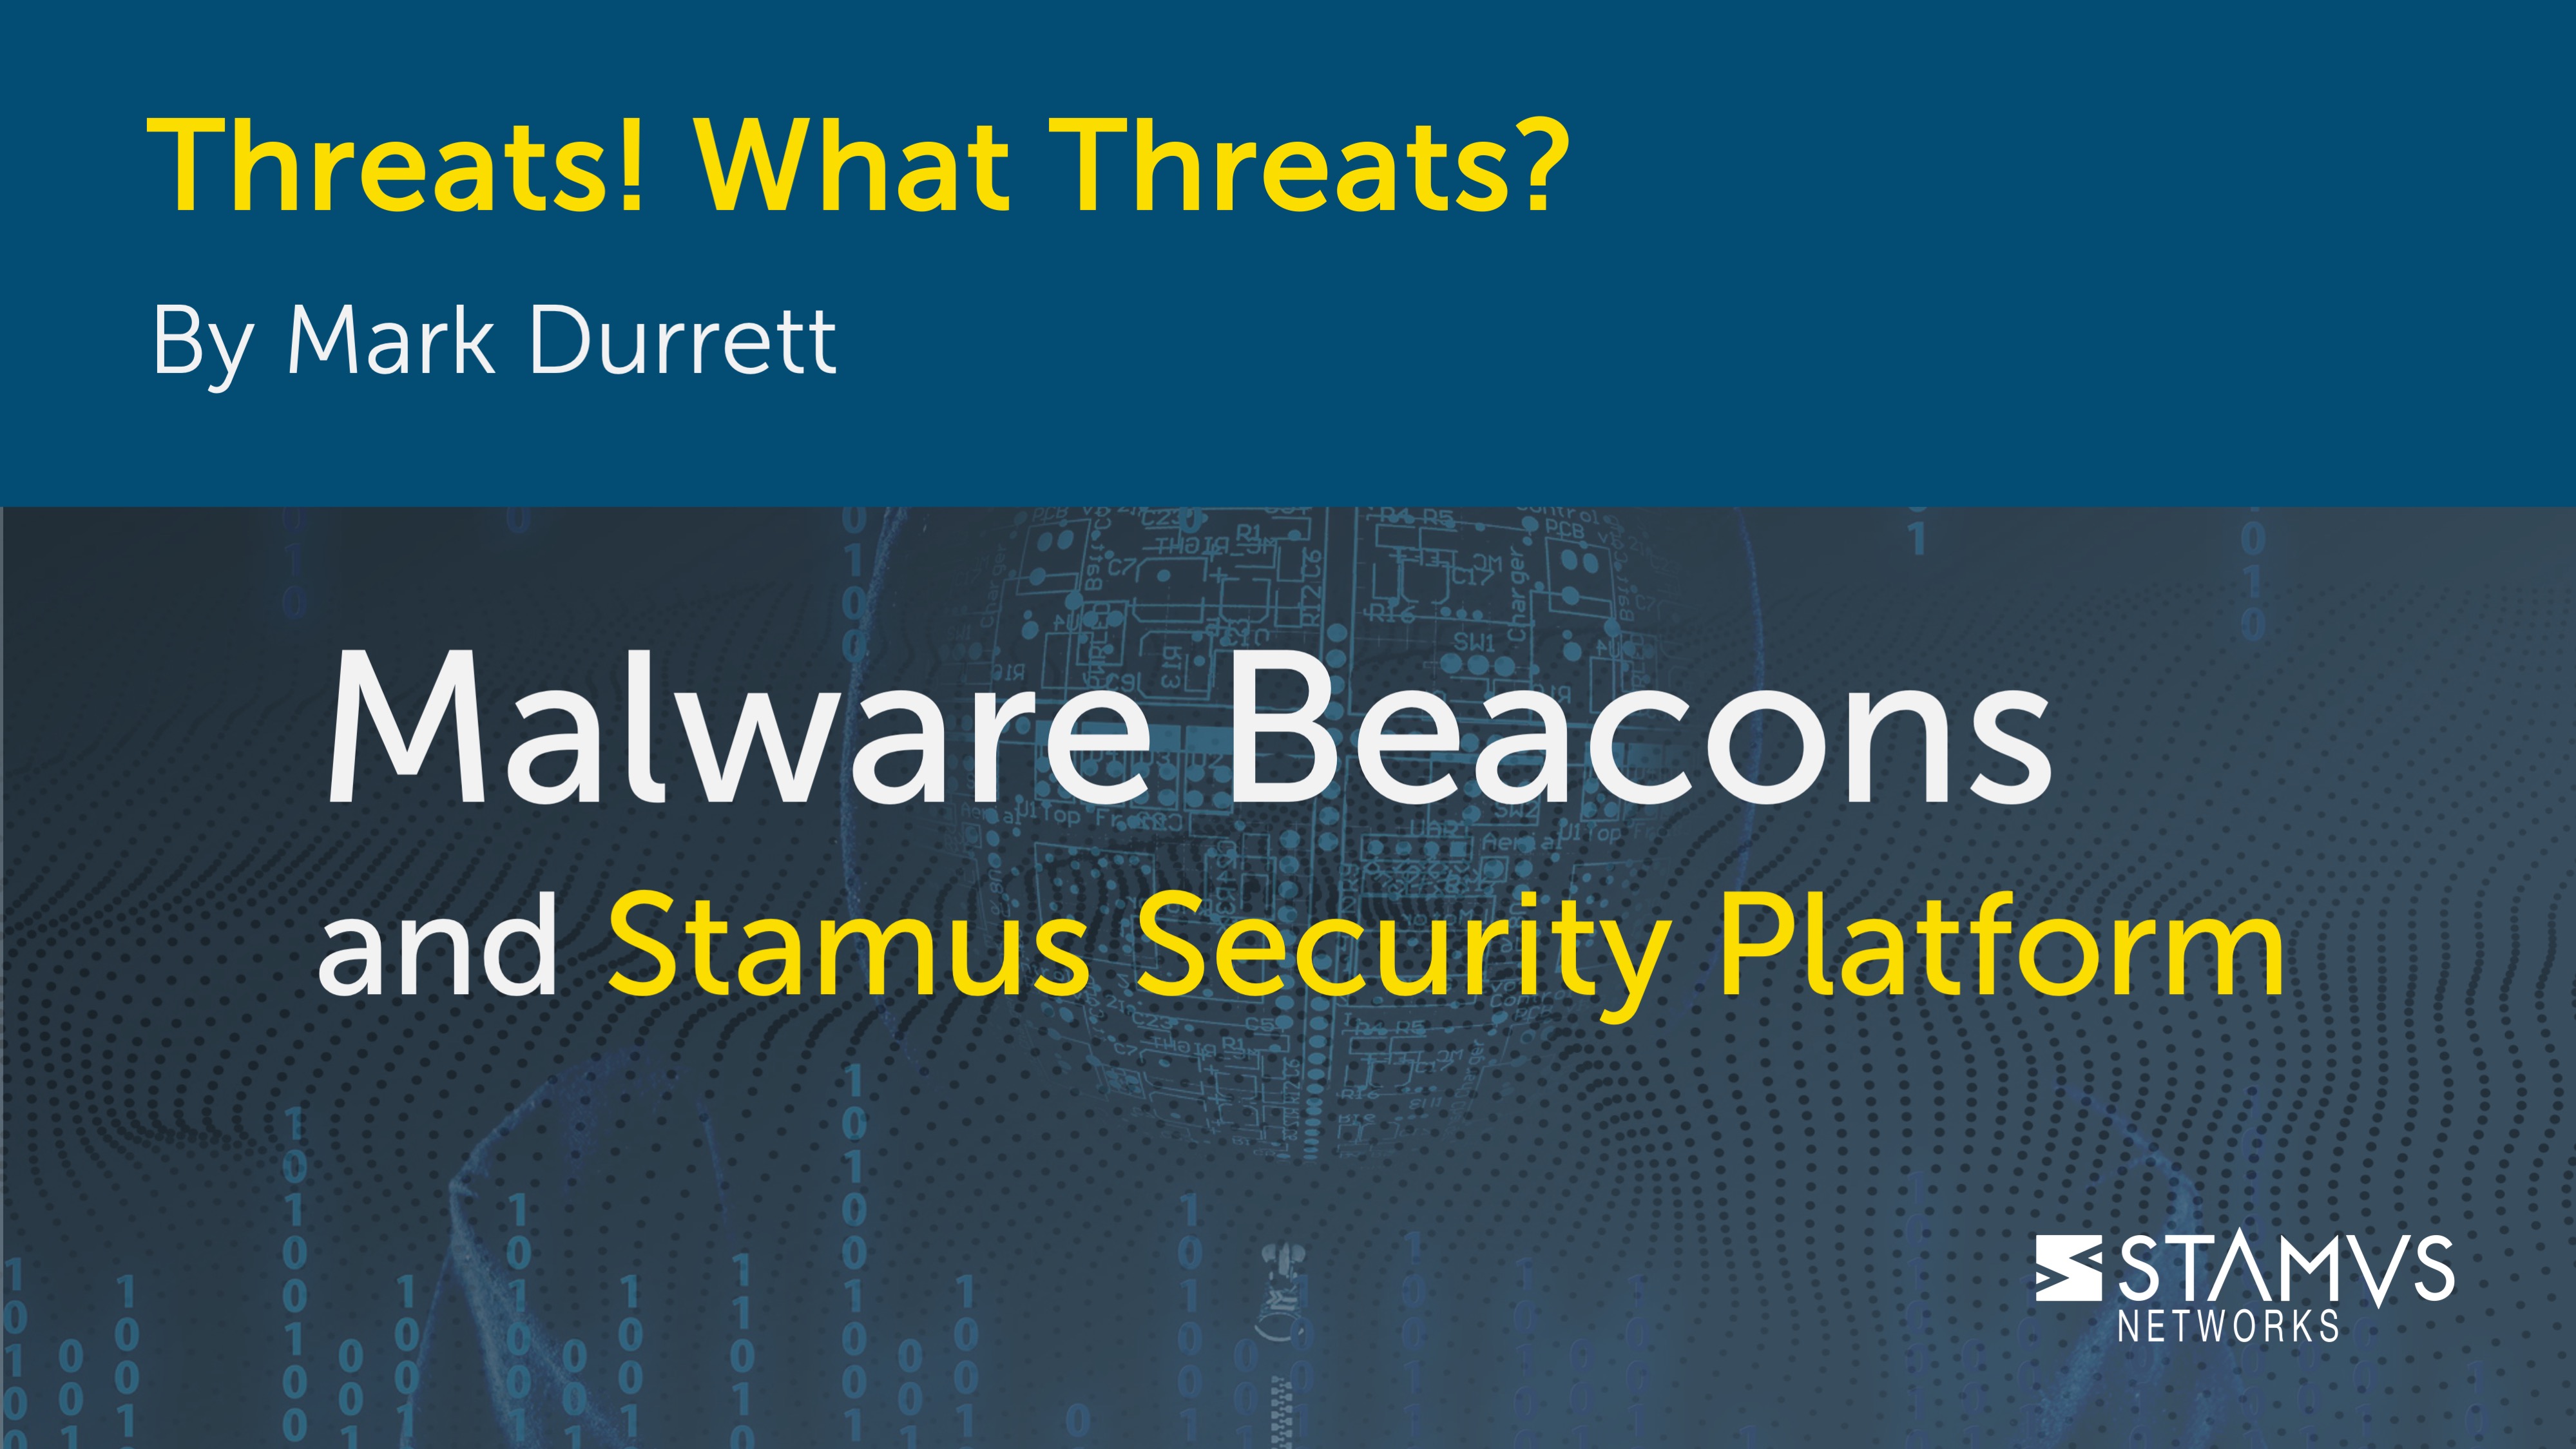 Malware Beacons and Stamus Security Platform